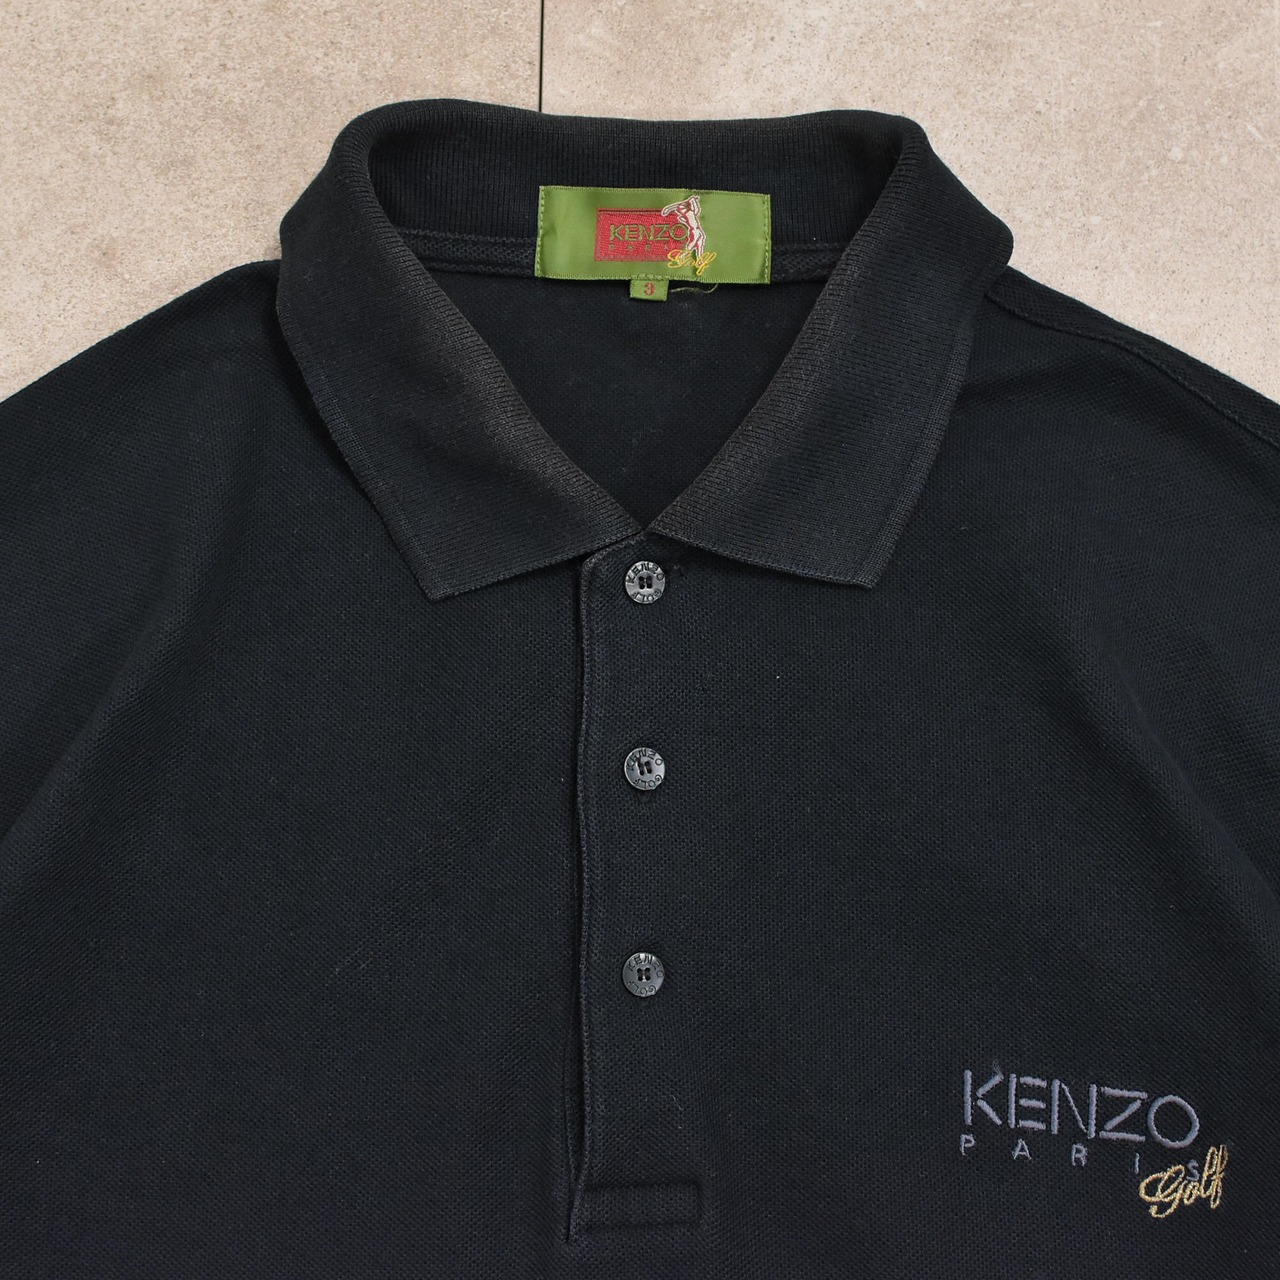 90s KEZO PARIS golf polo shirt